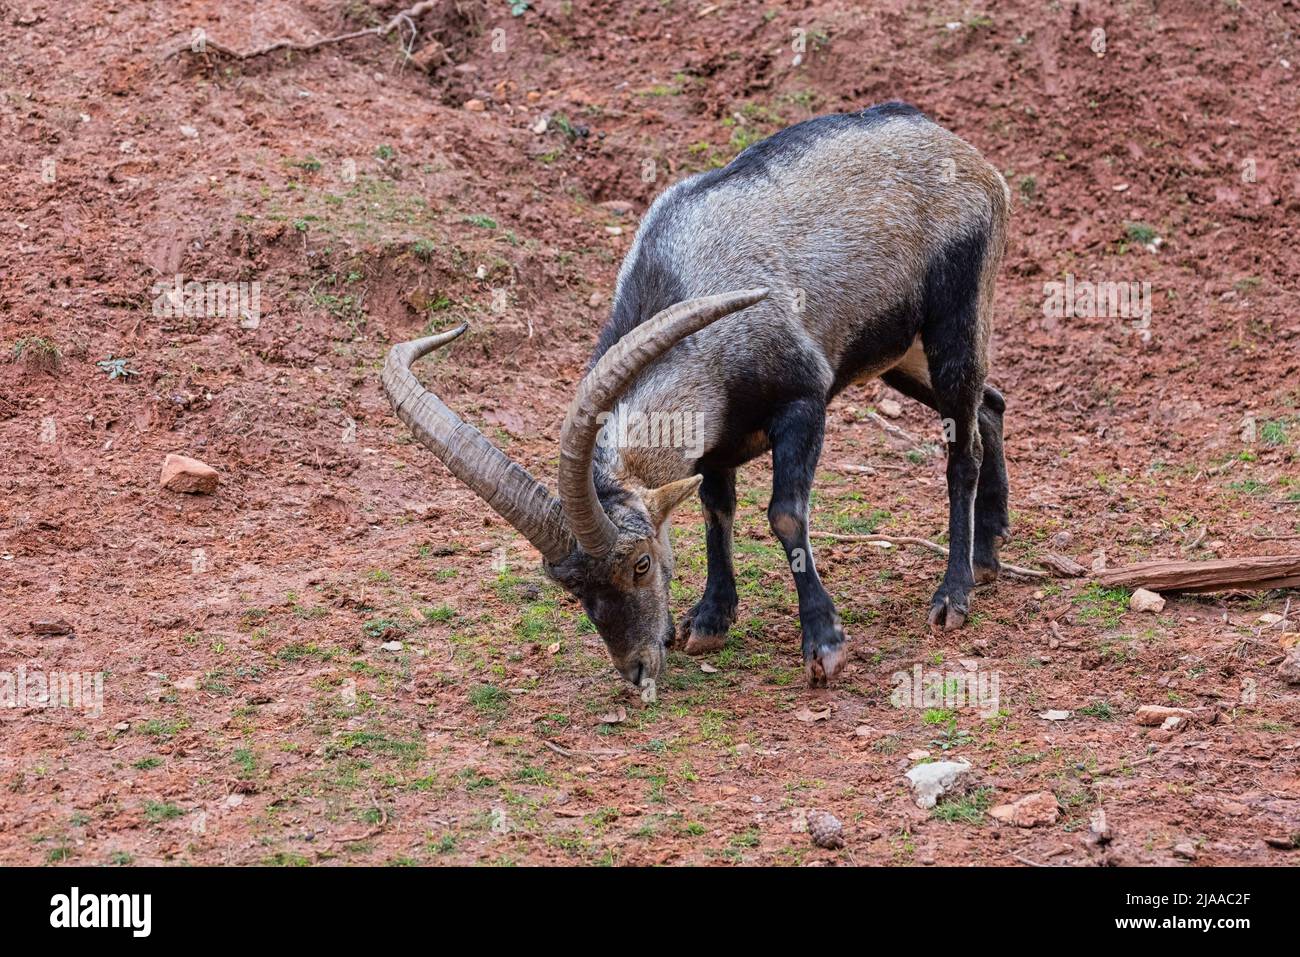 Ibex ibérico (Capra pyrenaica), también conocido como Cabra Hispanica, Cabra Montes, Ibex español, cabra salvaje española o cabra salvaje ibérica. Fotografiado Foto de stock